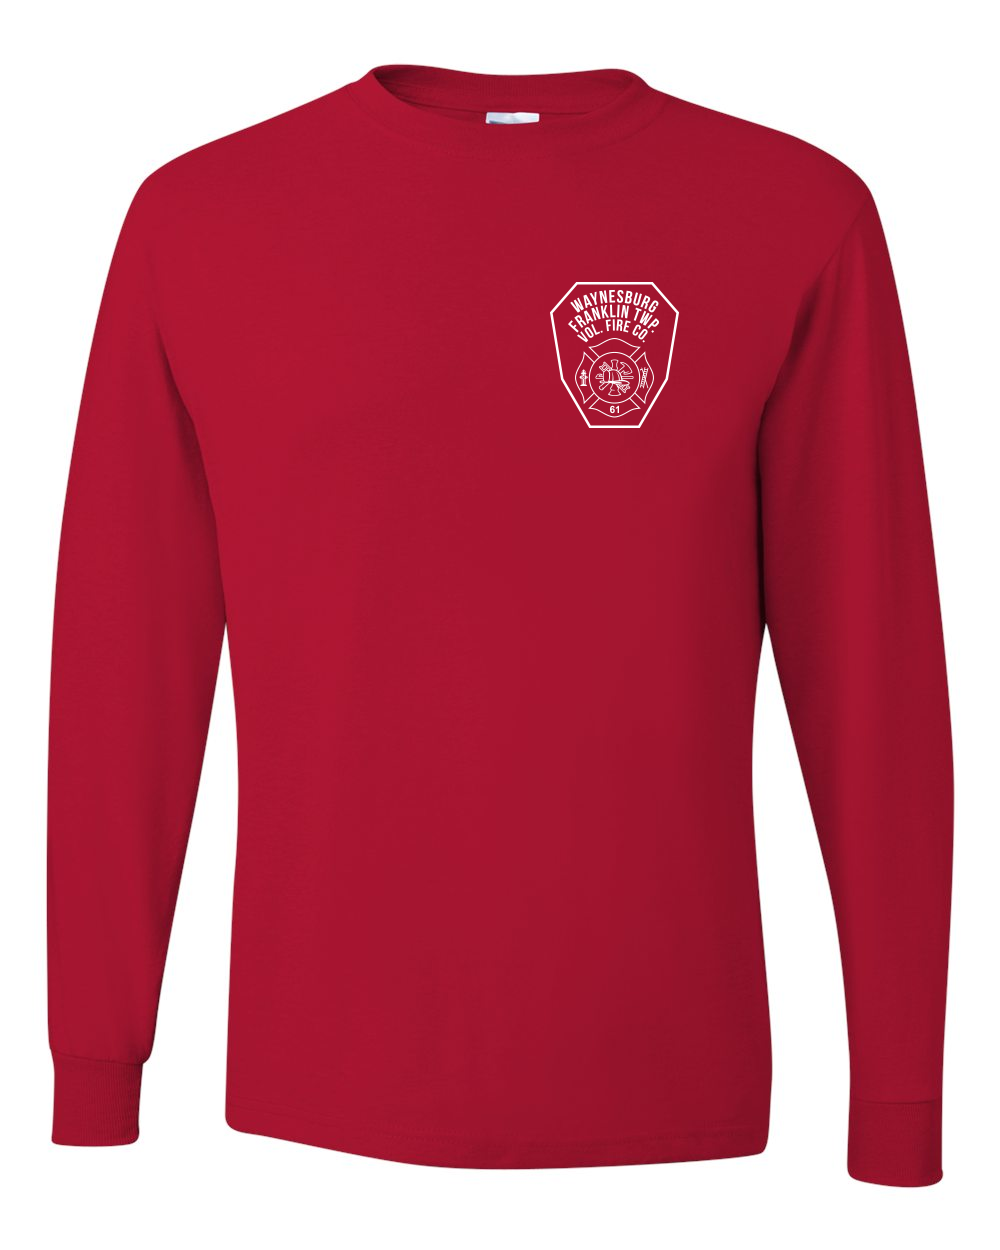 Waynesburg Fire - Dri-Power Long Sleeve 50/50 T-Shirt